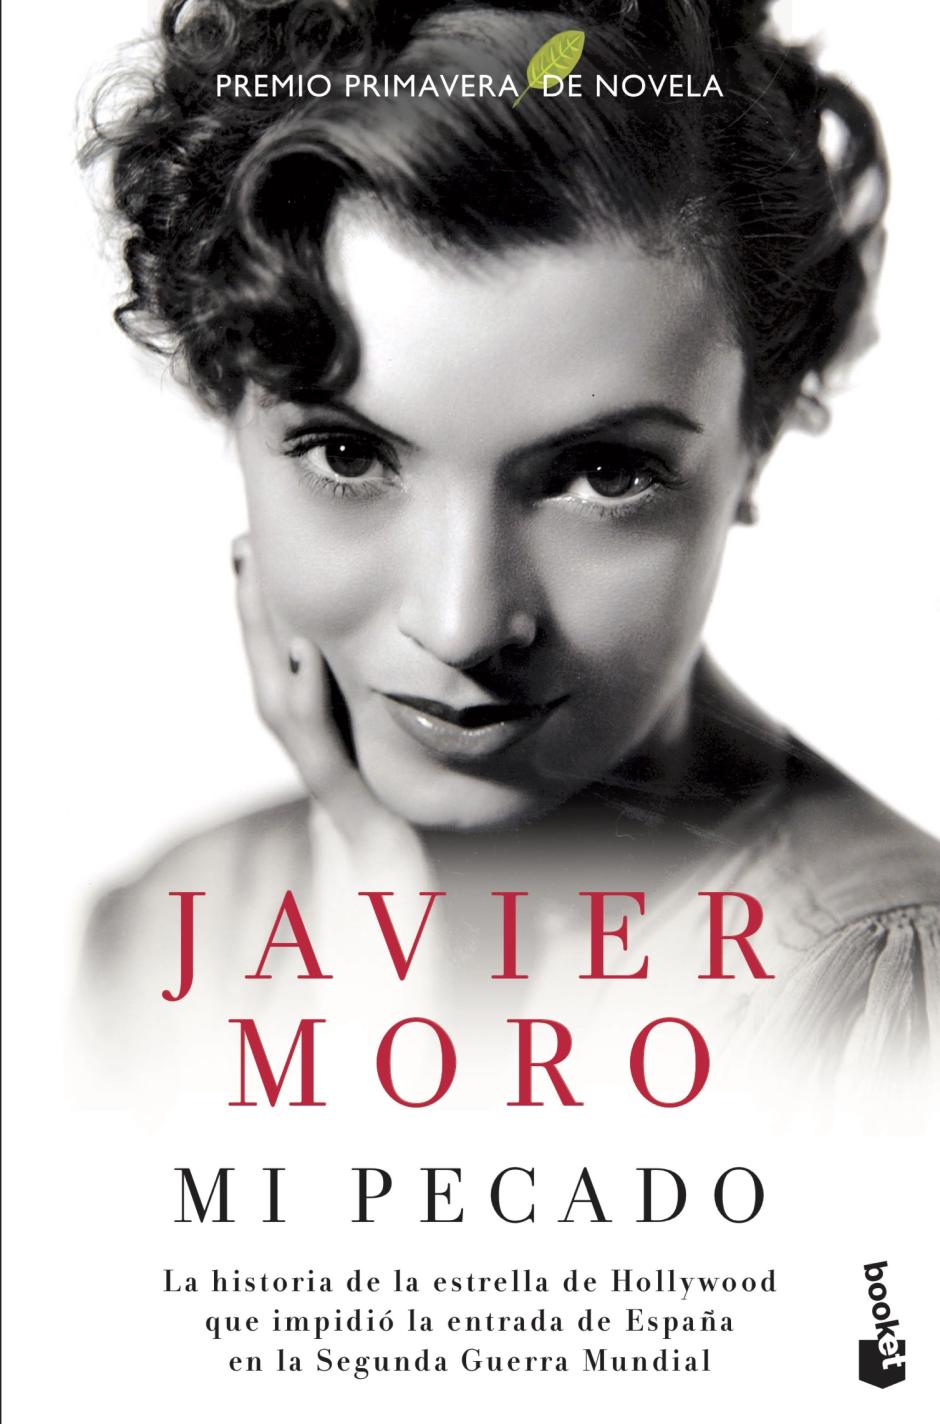 El libro 'Mi pecado', de Javier Moro, trata sobre la vida de Conchita Montenegro